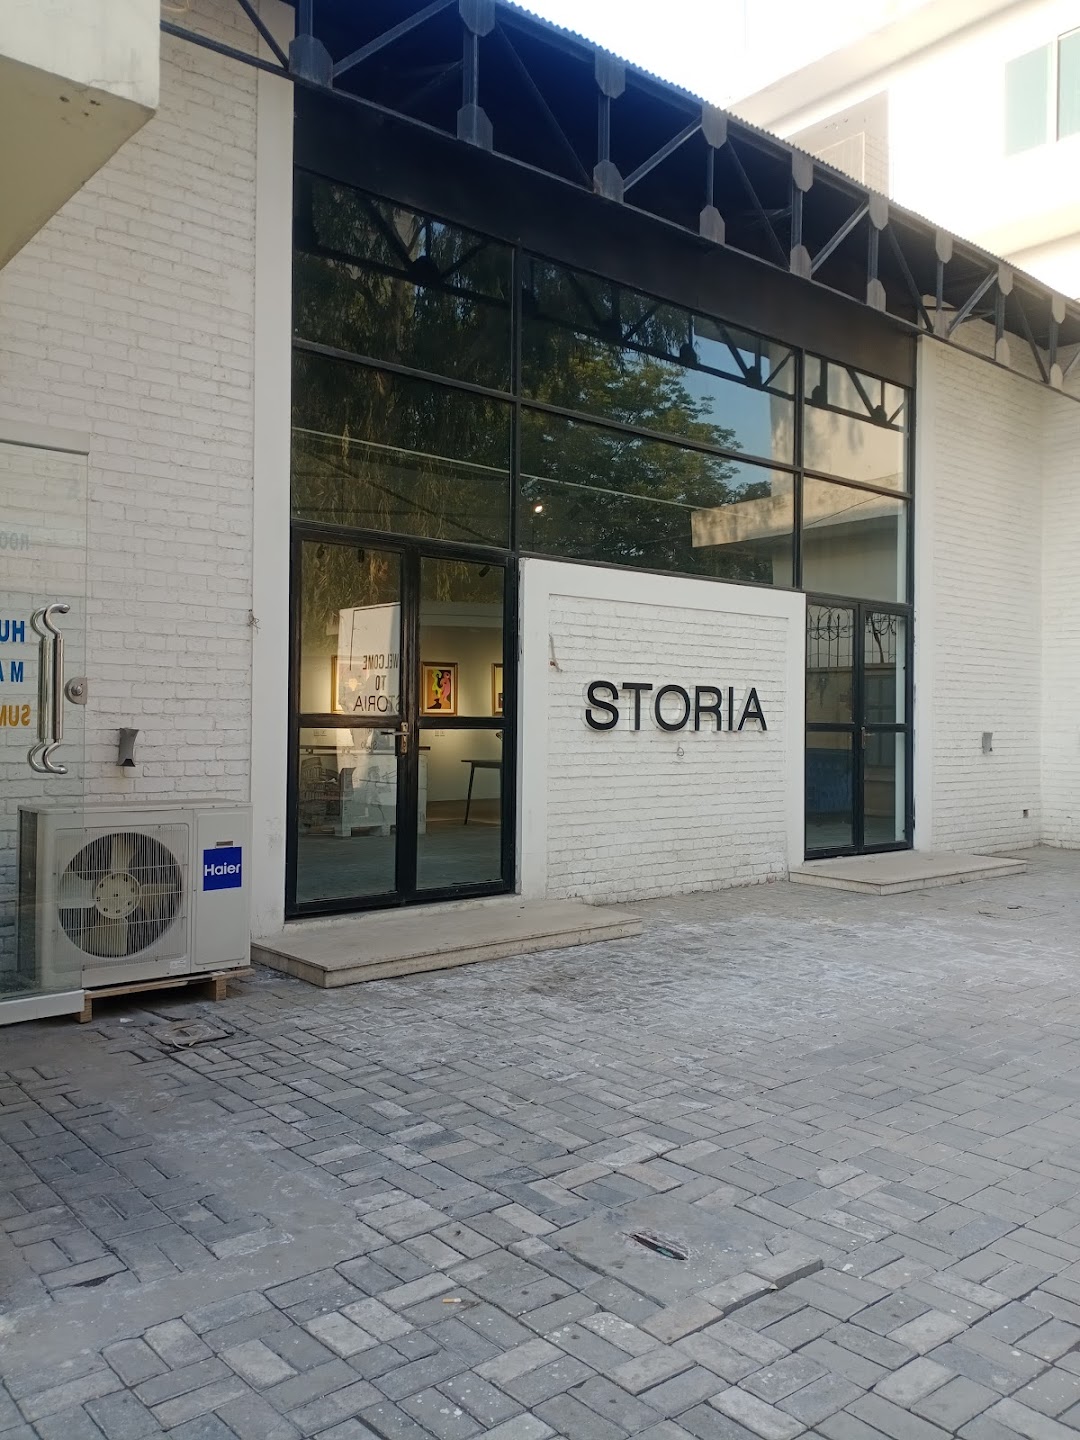 STORIA ART STUDIO